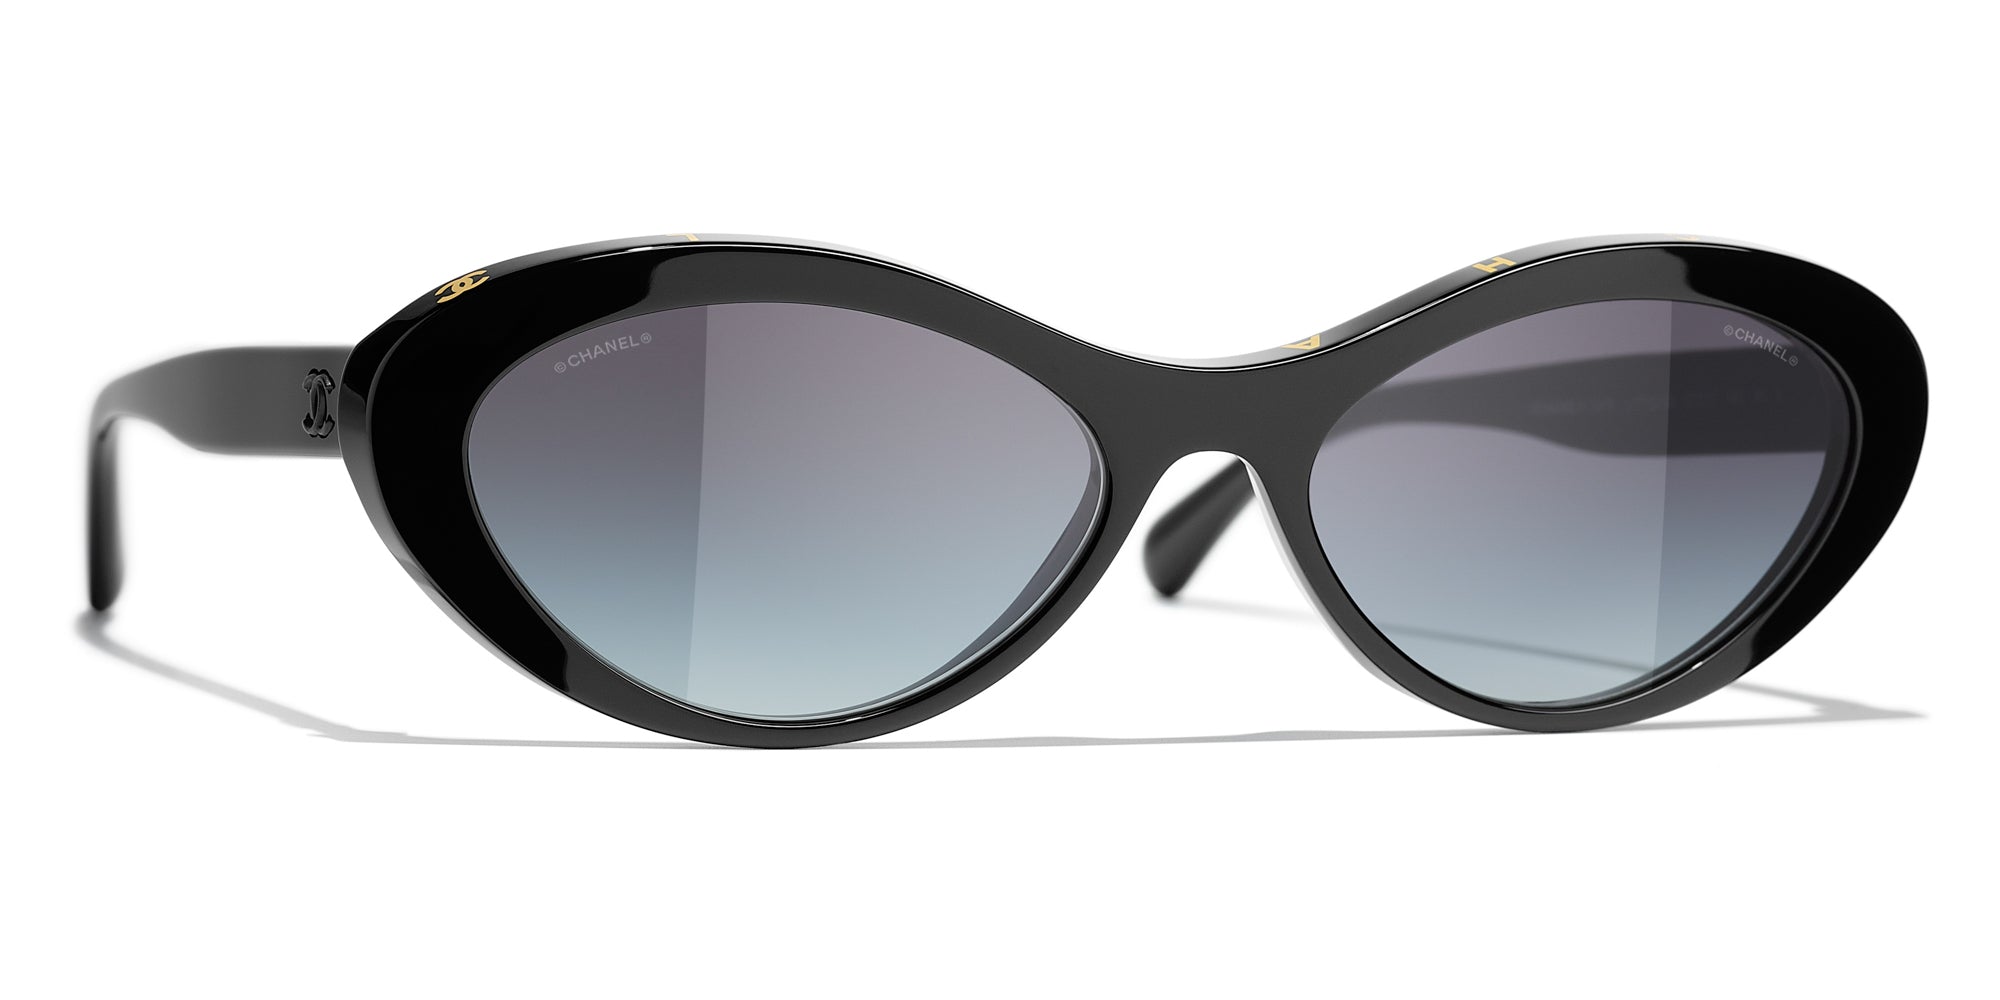 Chanel 5416 1710/S6 Sunglasses Oval Sunglasses Black